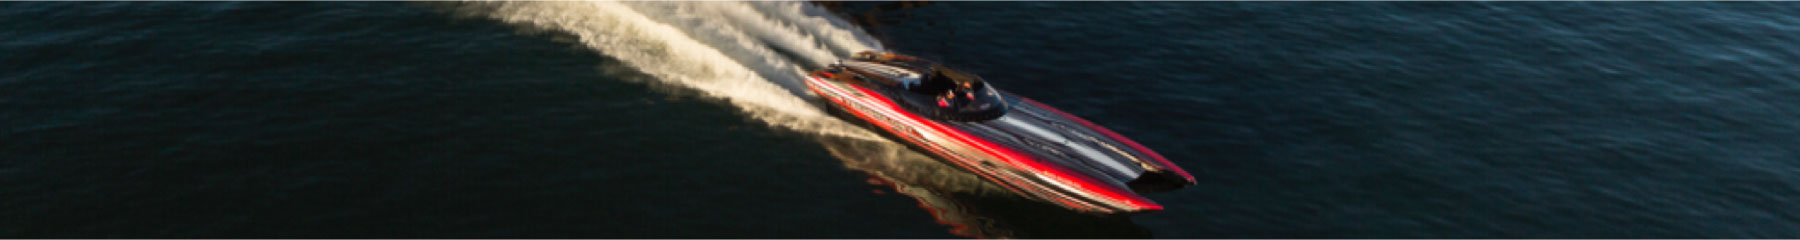 Speed Boat Racing Across Lake Powell